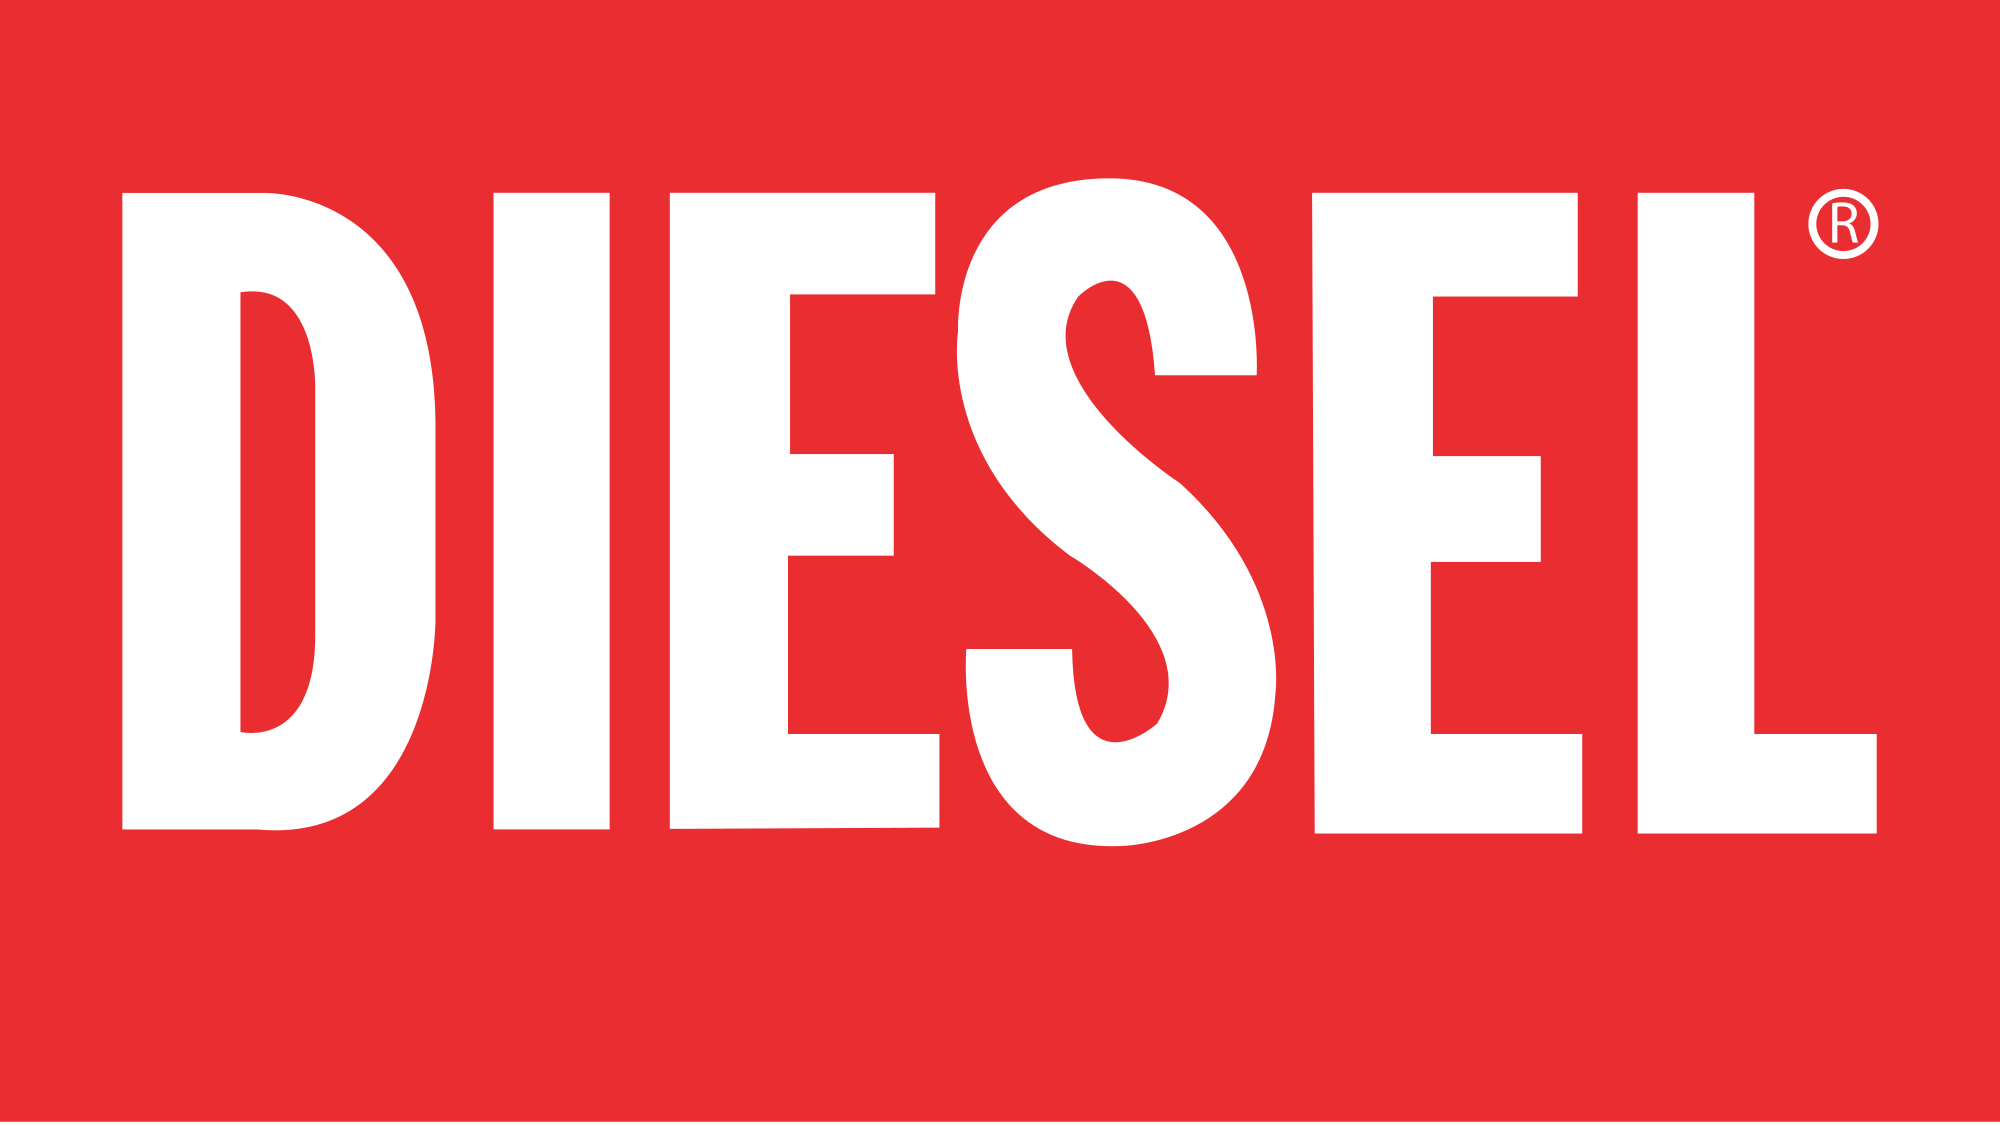 Diesel Brand Logo